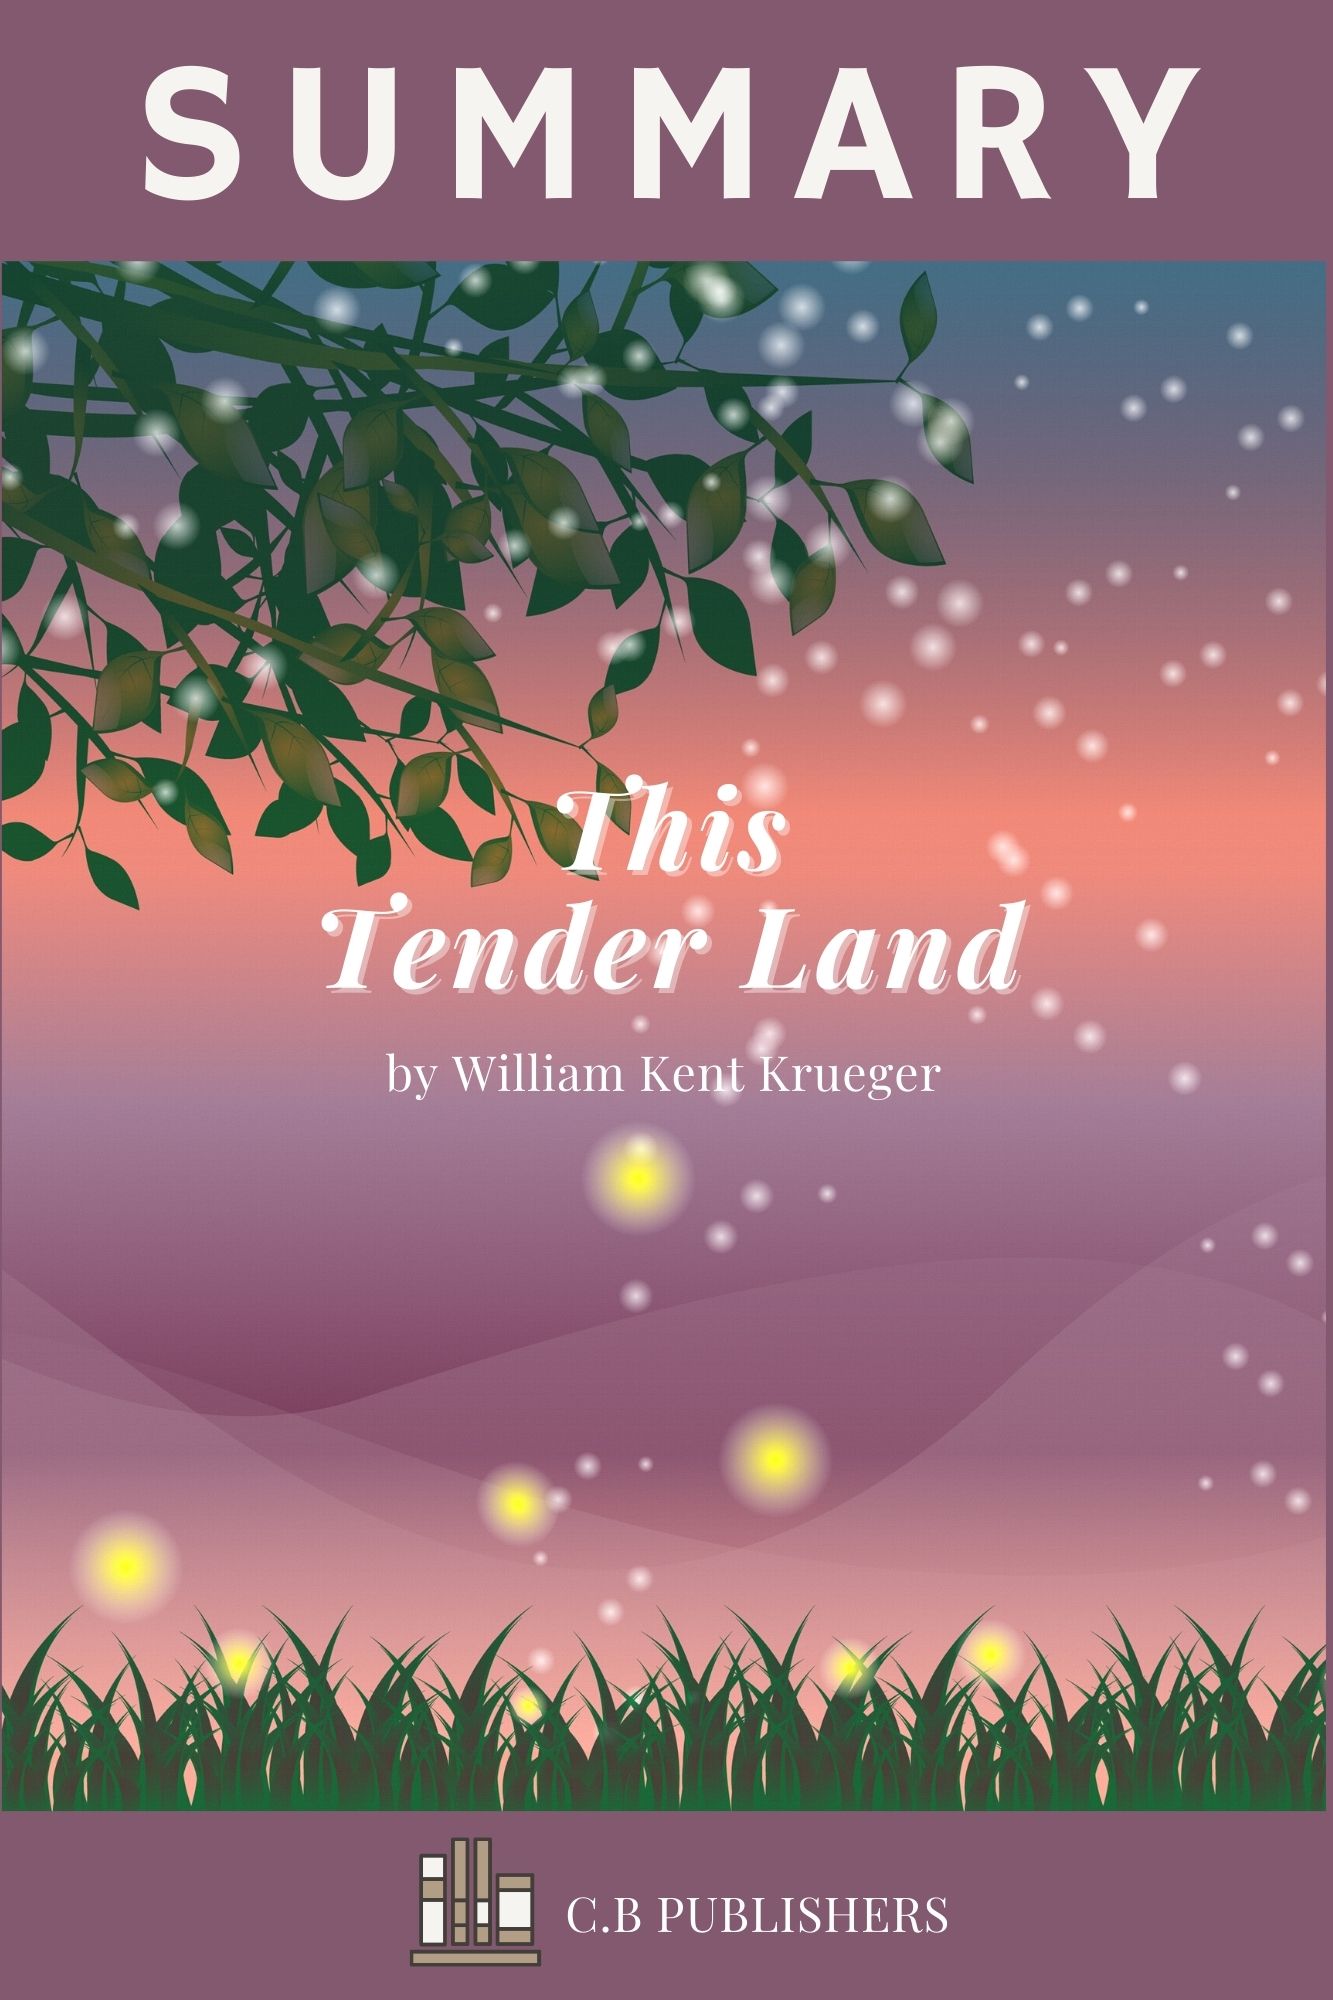 This Tender Land summary